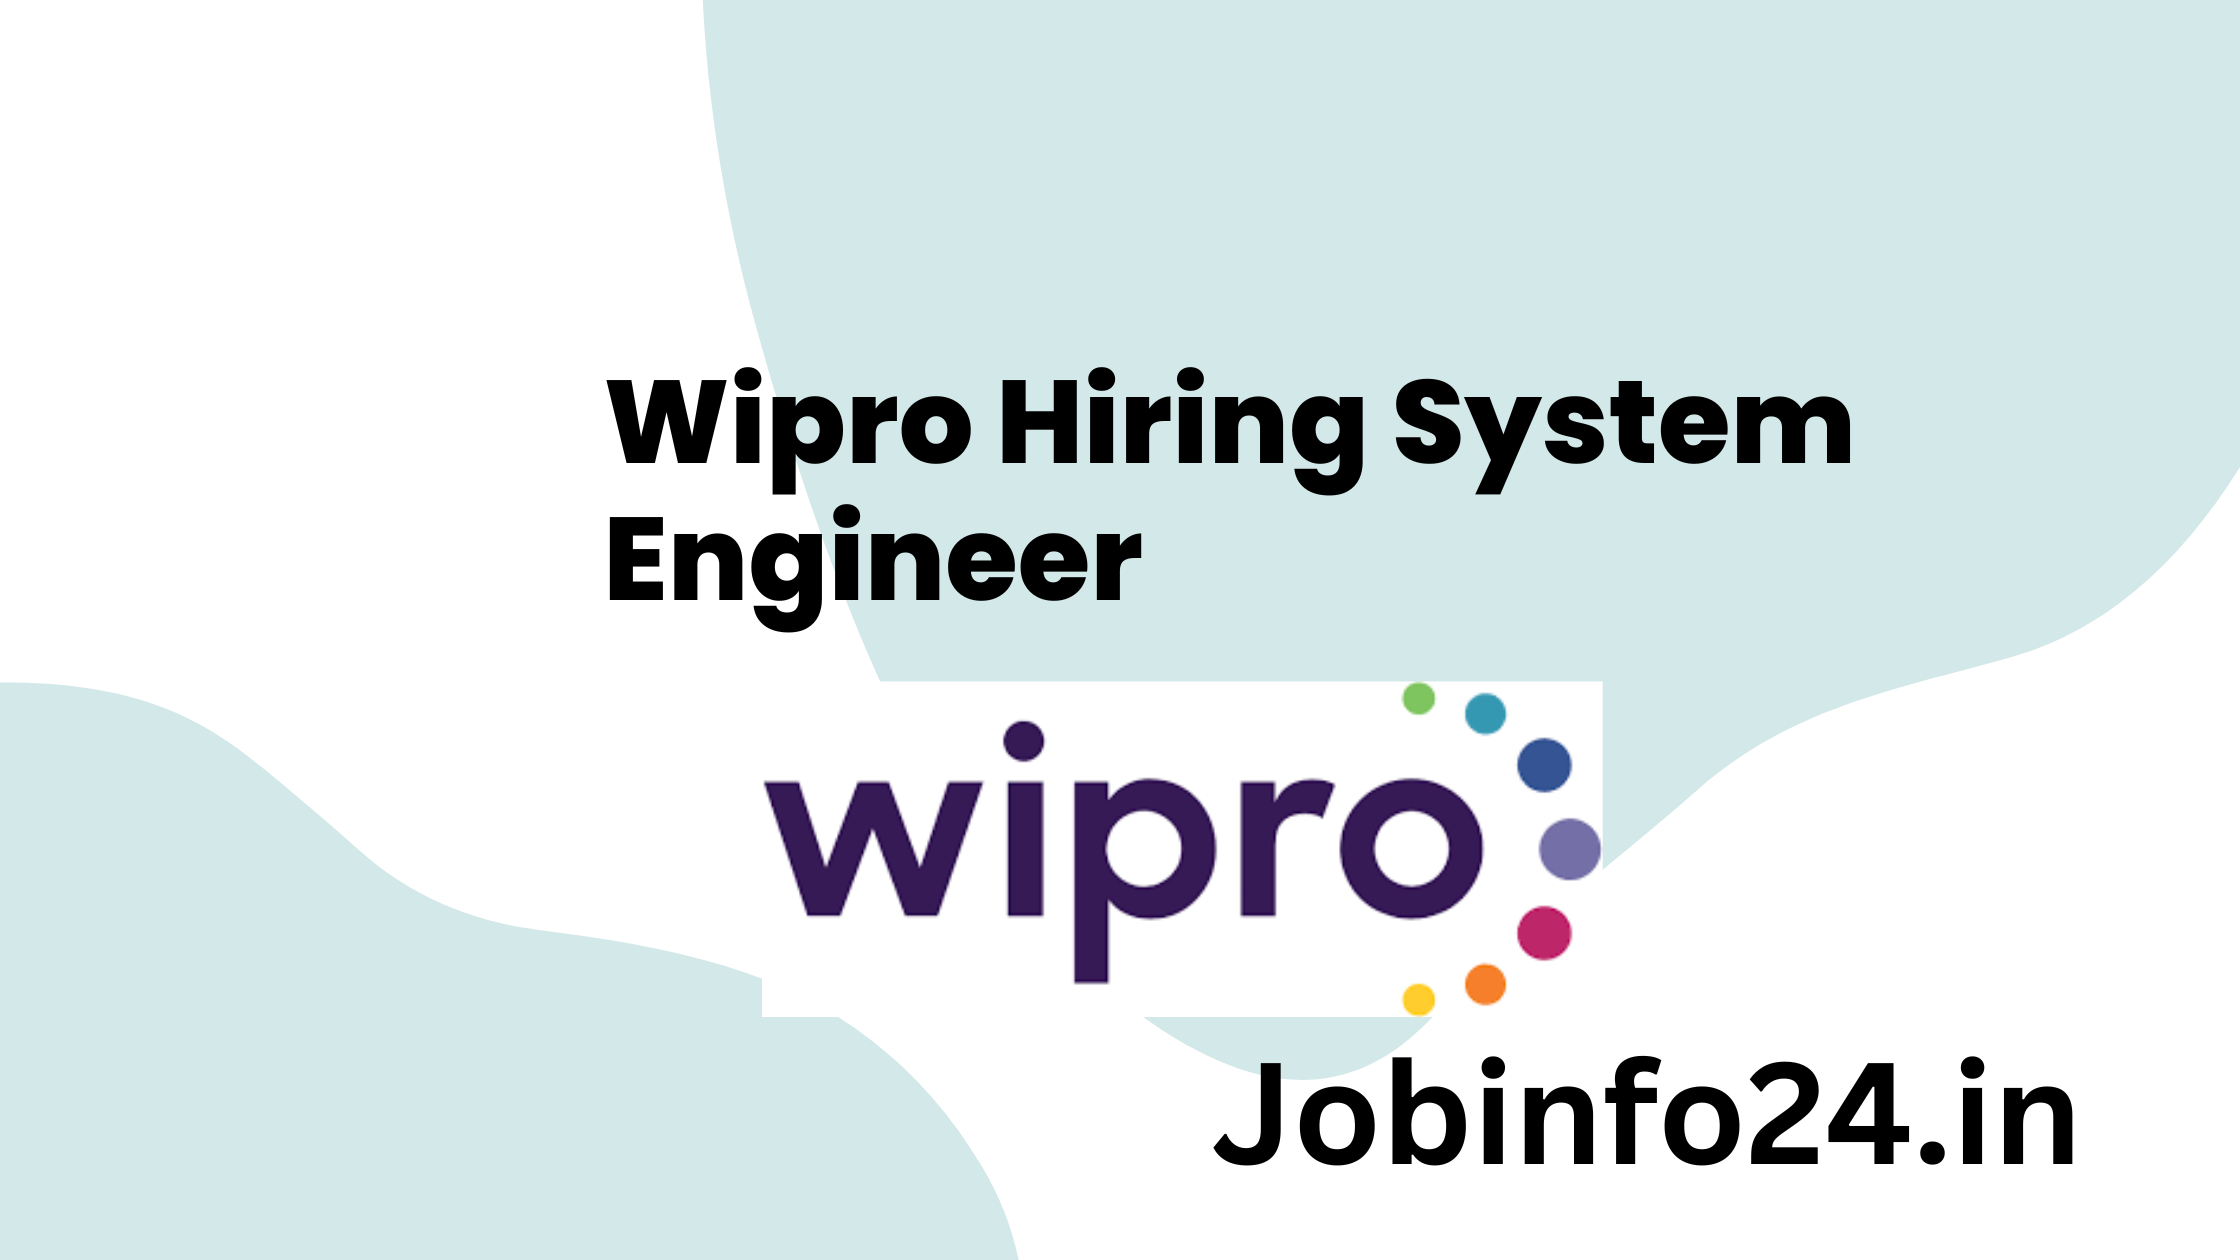 Wipro Hiring System Engineer